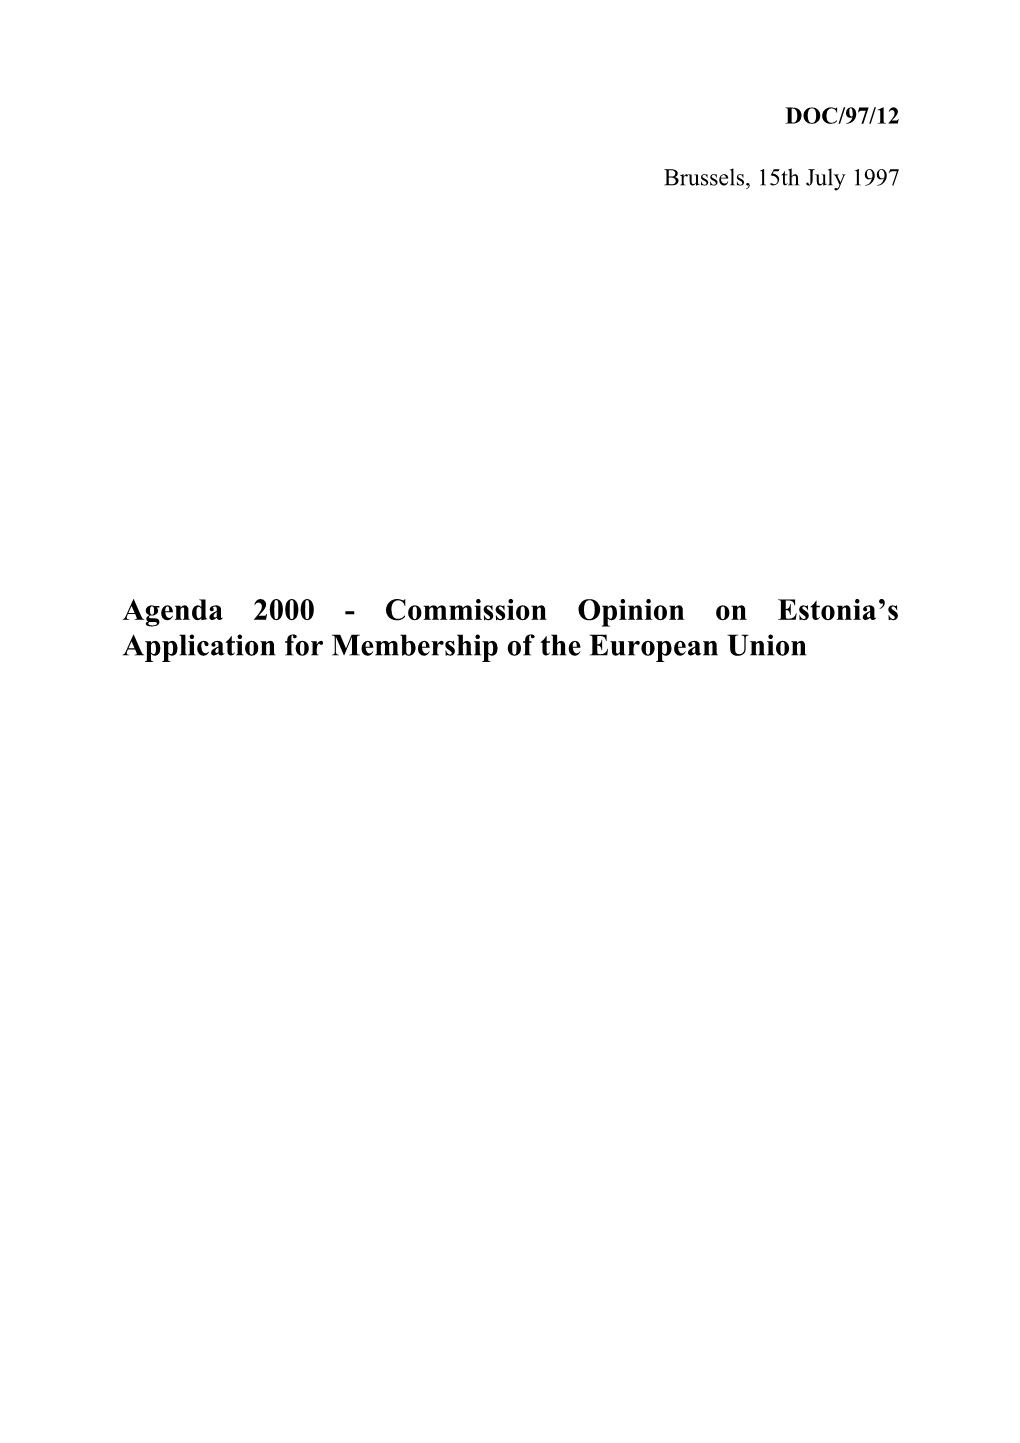 Agenda 2000 - Commission Opinion on Estonia S Application for Membership of the European Union